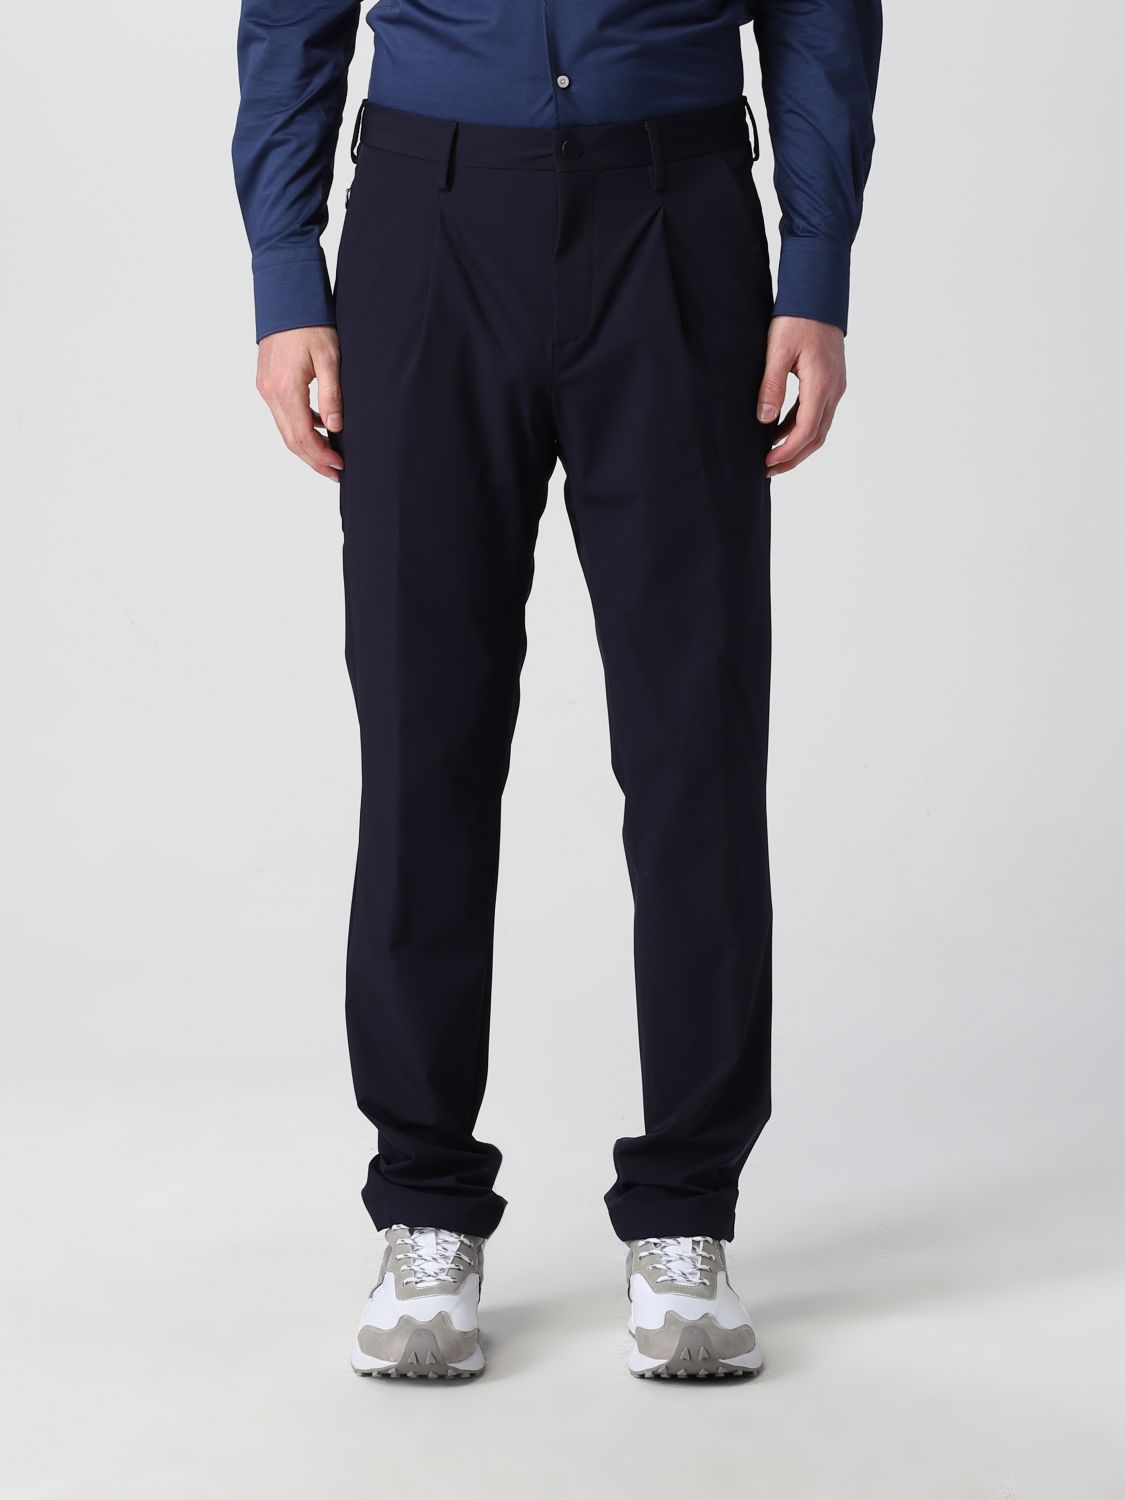 BOGGI MILANO: pants in BTech stretch nylon - Navy | Boggi Milano pants ...